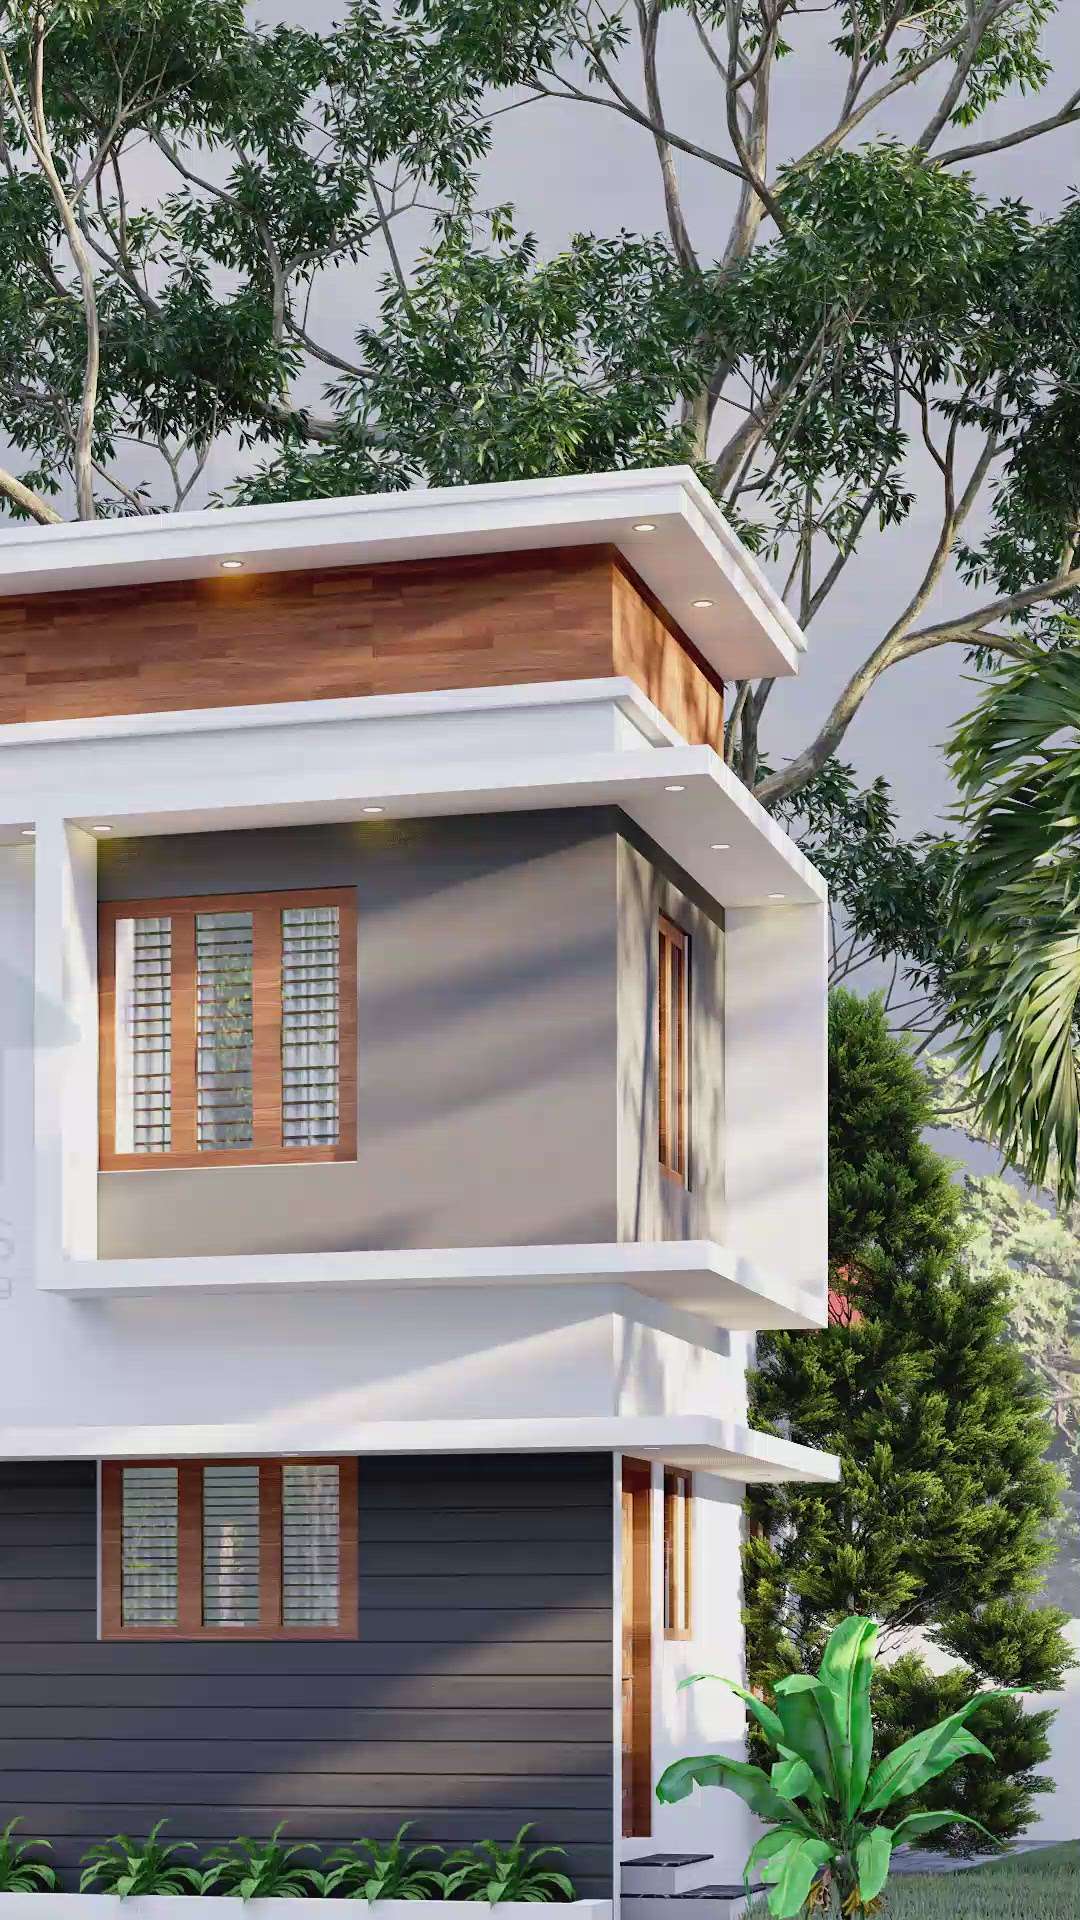 New 3D Exterior Design 🥰🙌😍
Contact Us +91 8848721023
#trivandrum #construction #home #designs #inetriordesigning #iqdesignshome #iqdesignsconstruction